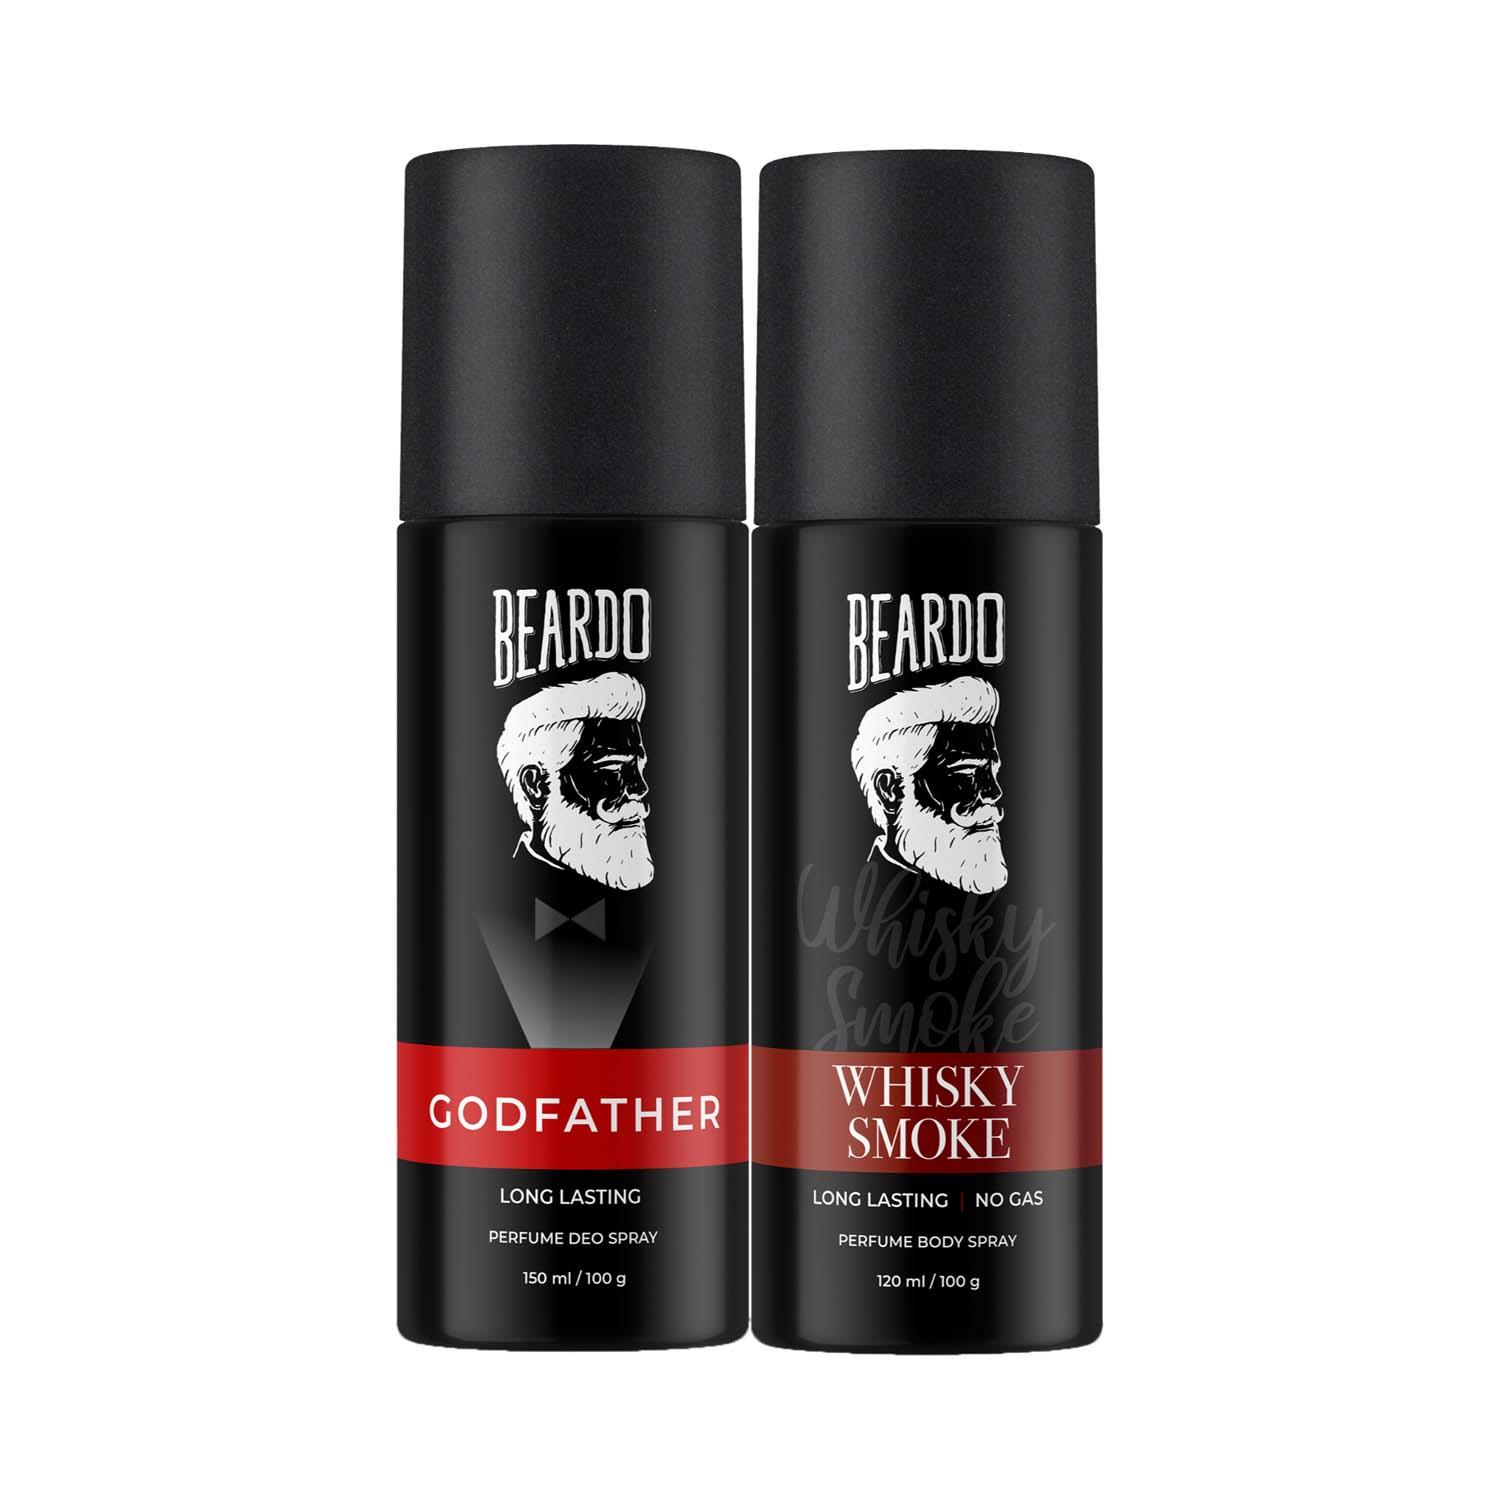 Beardo Godfather & Whisky Smoke Body Spray For Men Set (2 pcs)